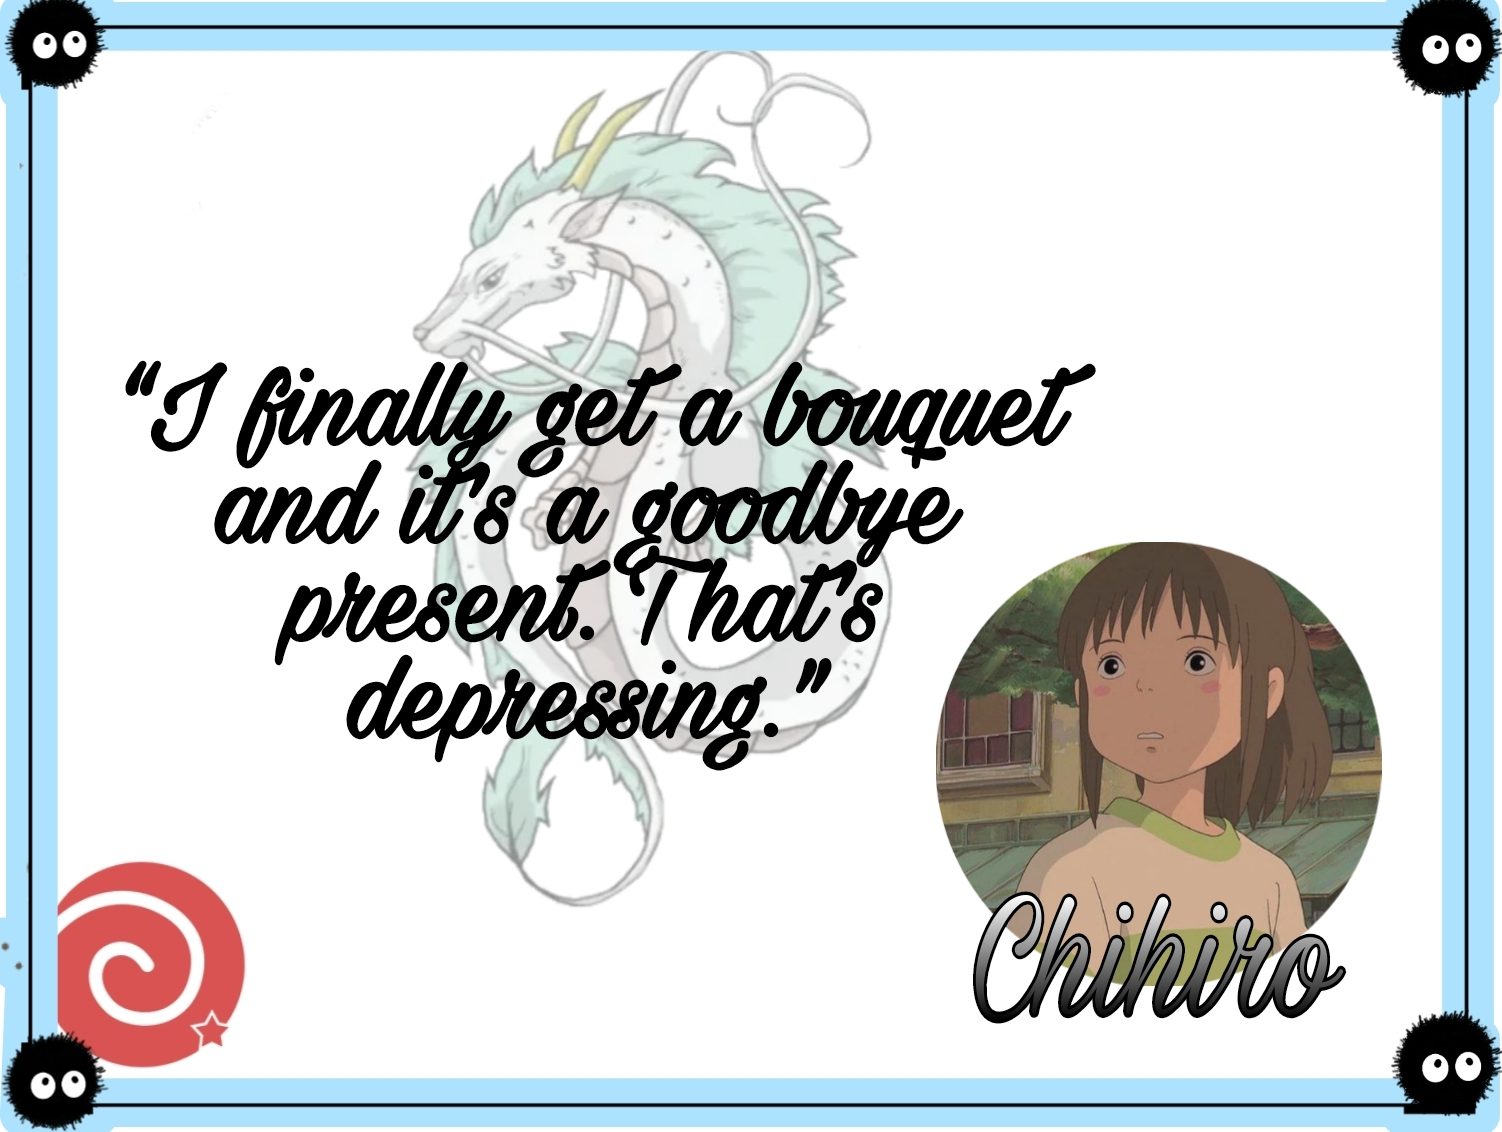 Chihiro quotes